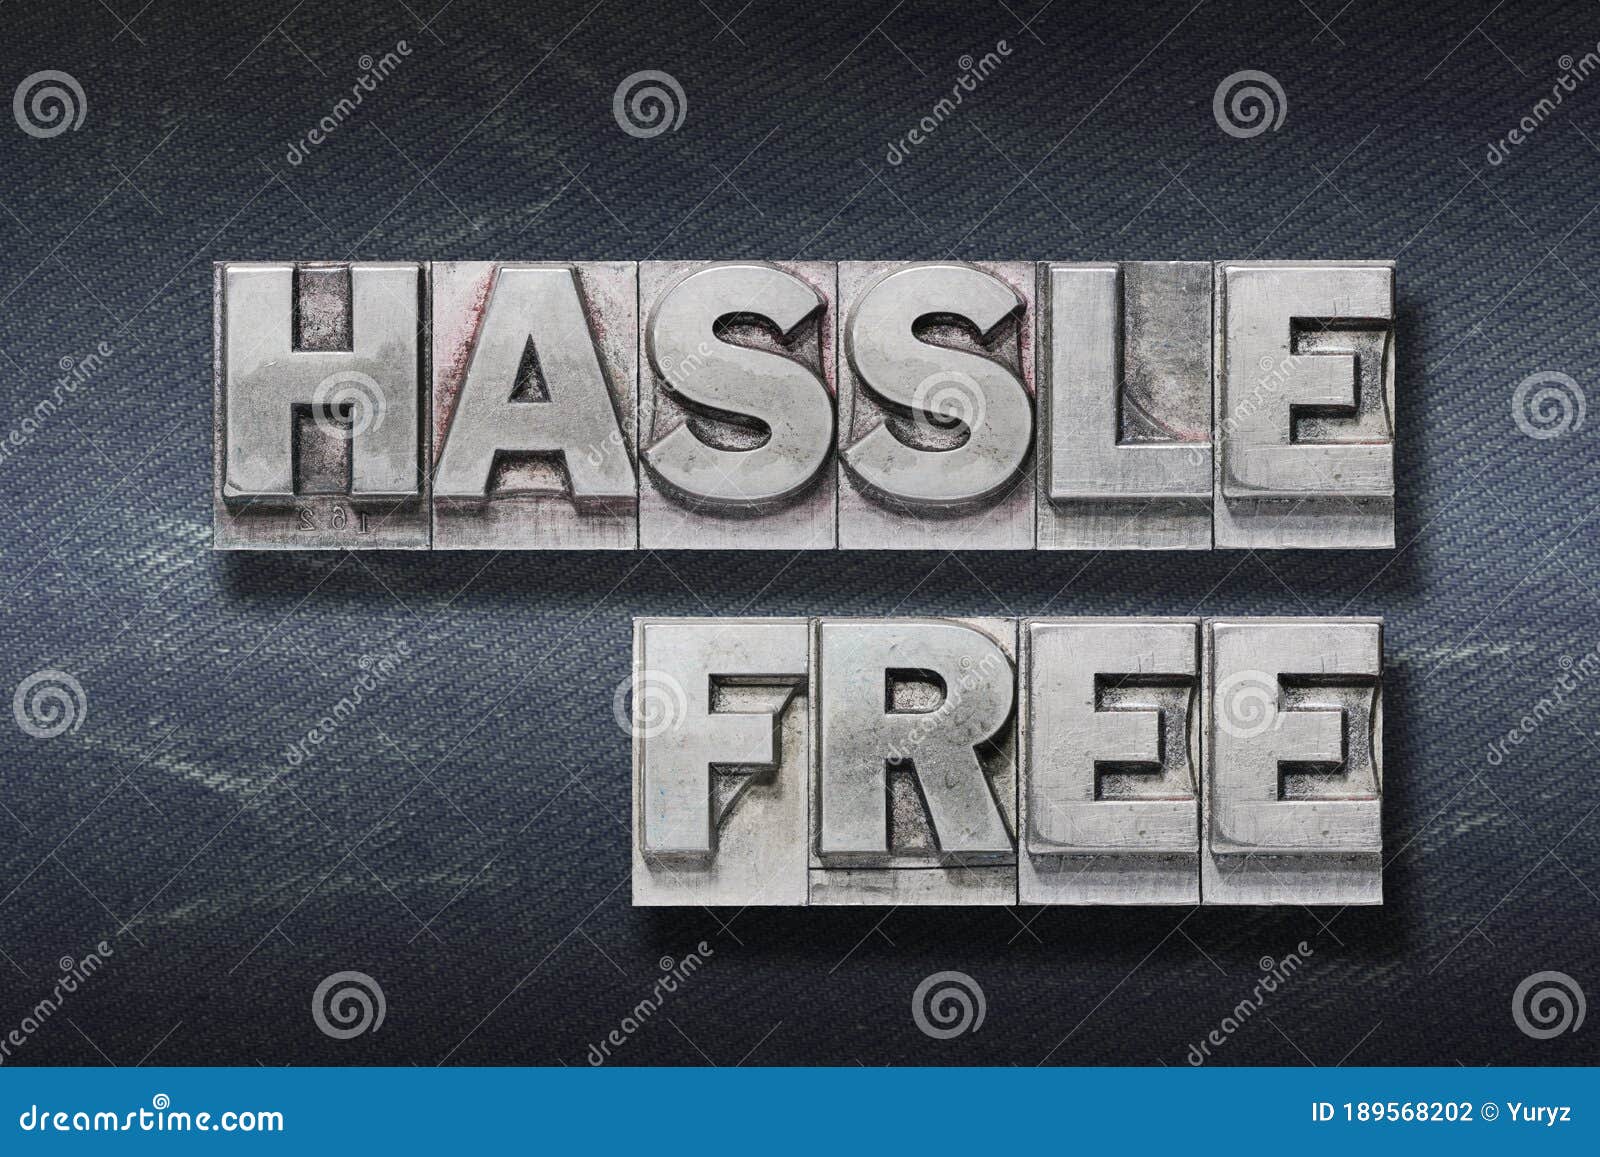 hassle free den